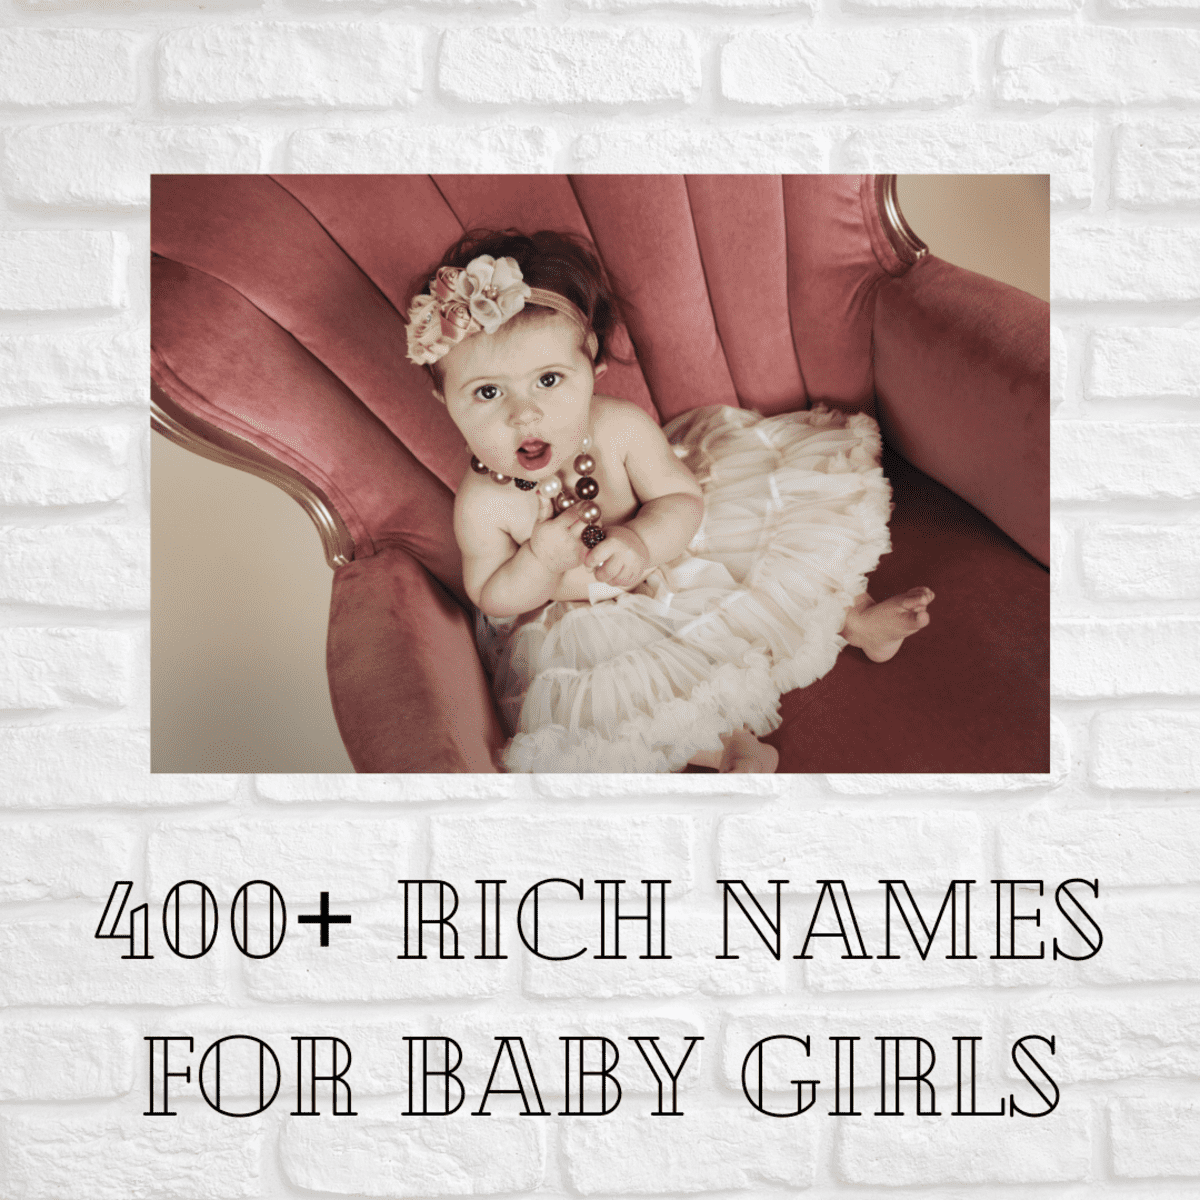 400+ Rich Girl Names for Babies - WeHaveKids